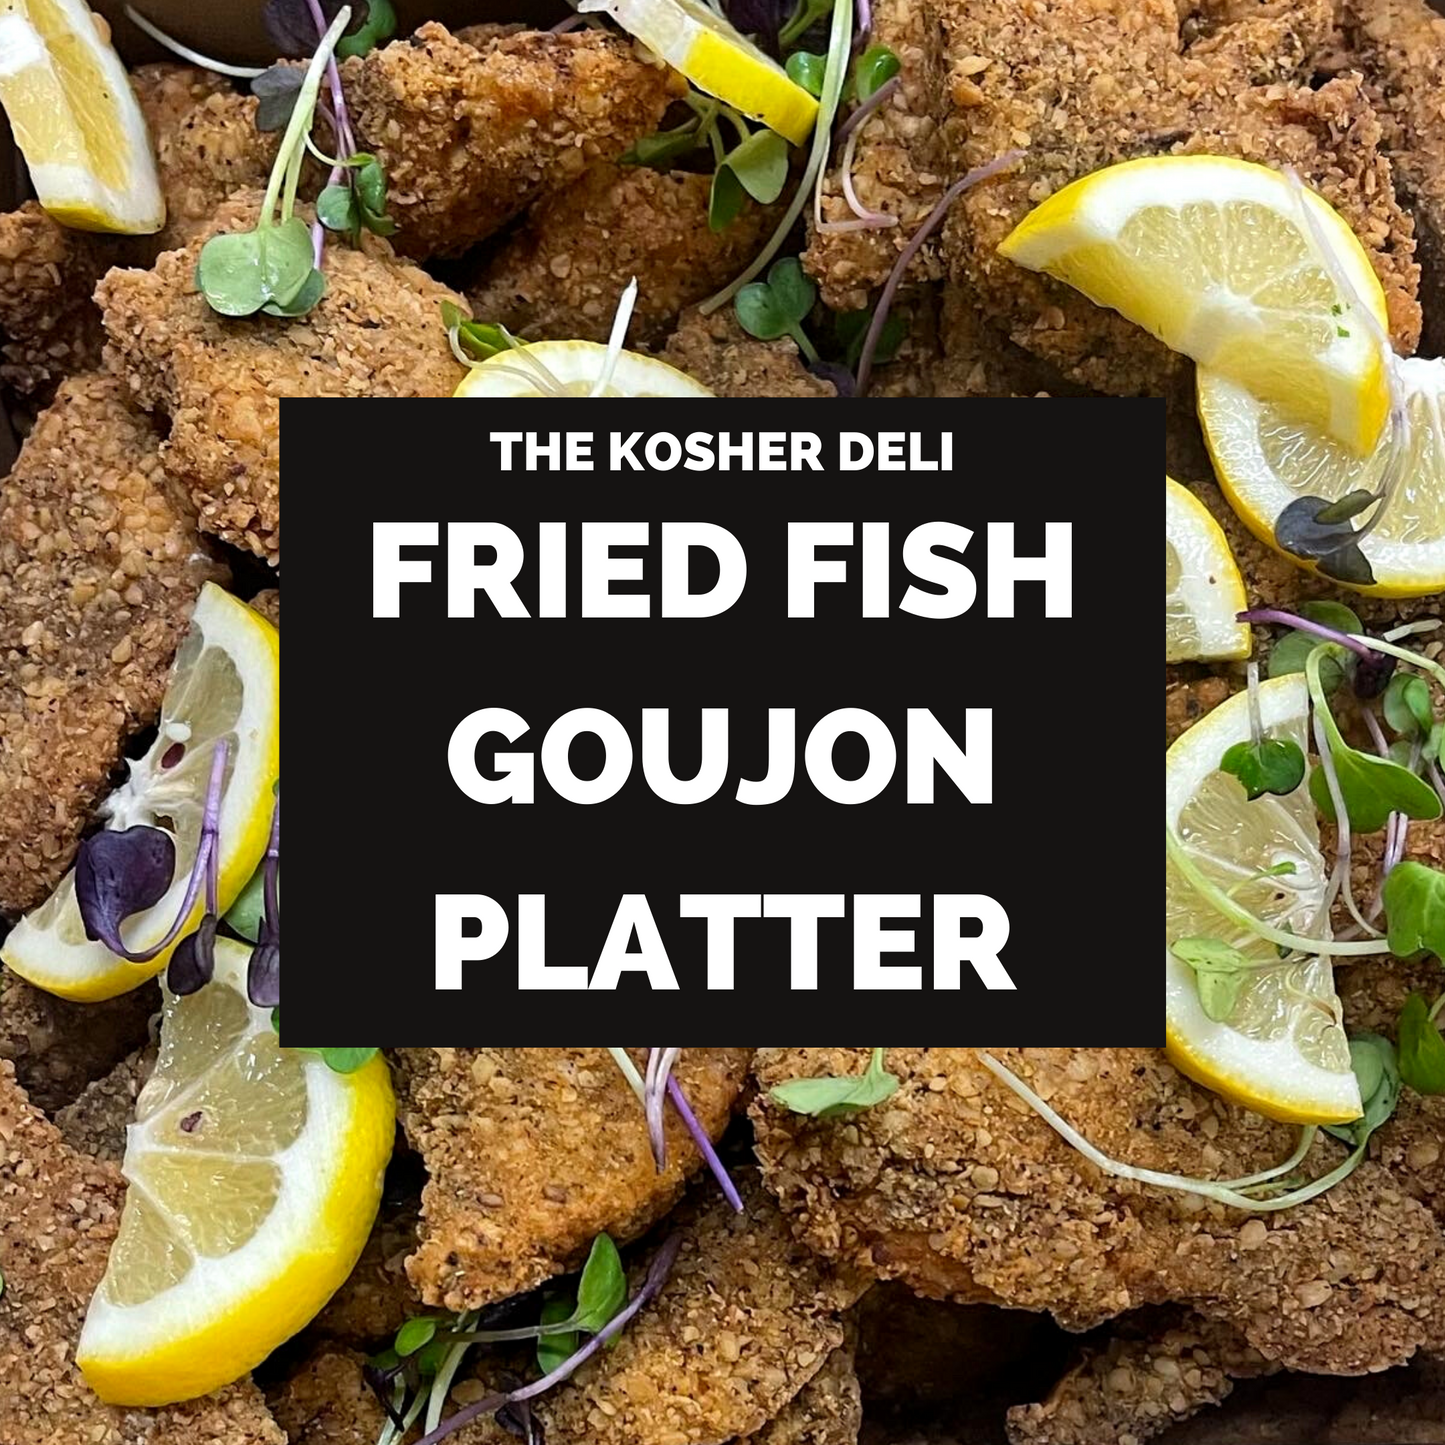 Fish Goujon Platter - serves 15-20 people